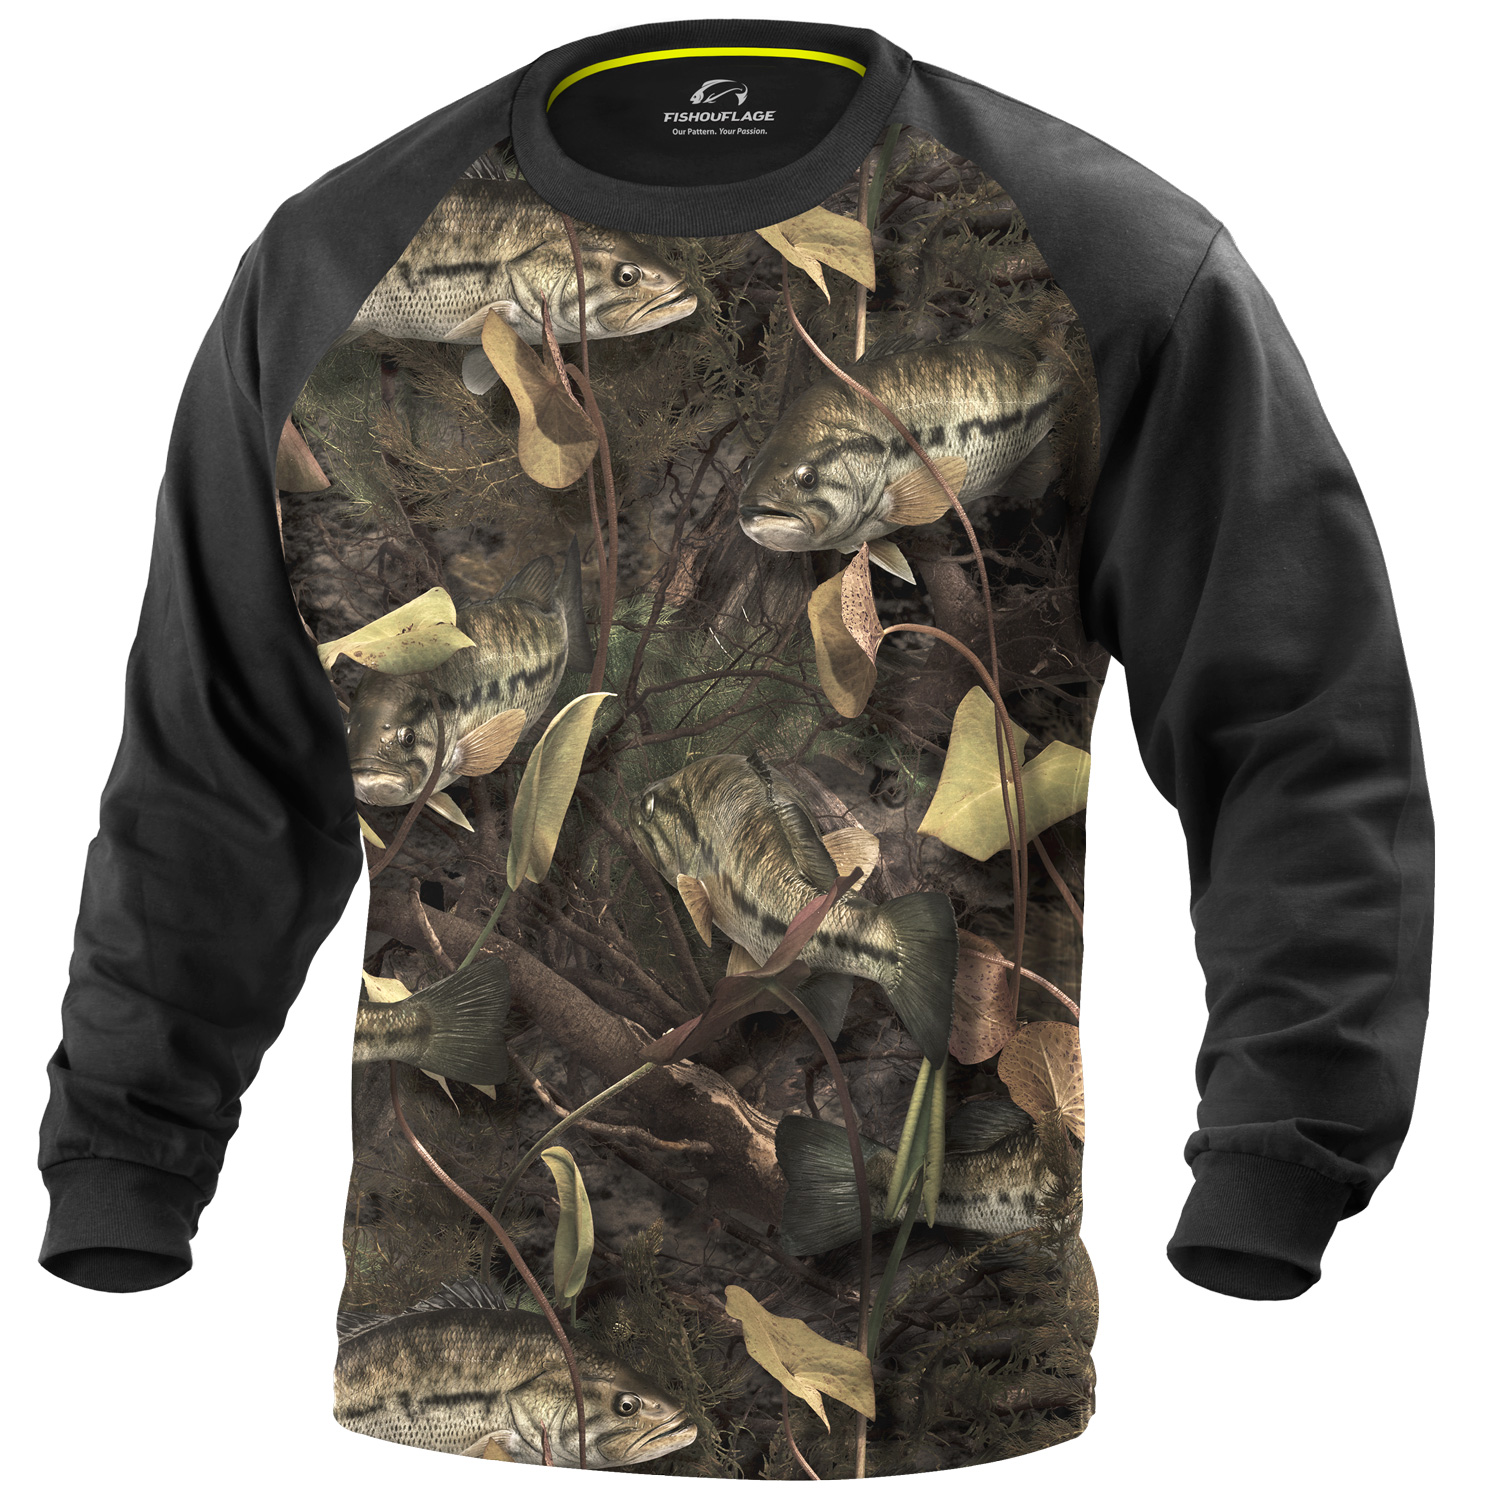 Long Sleeve Performance Fishing Shirt for Men | Fishouflage Bass